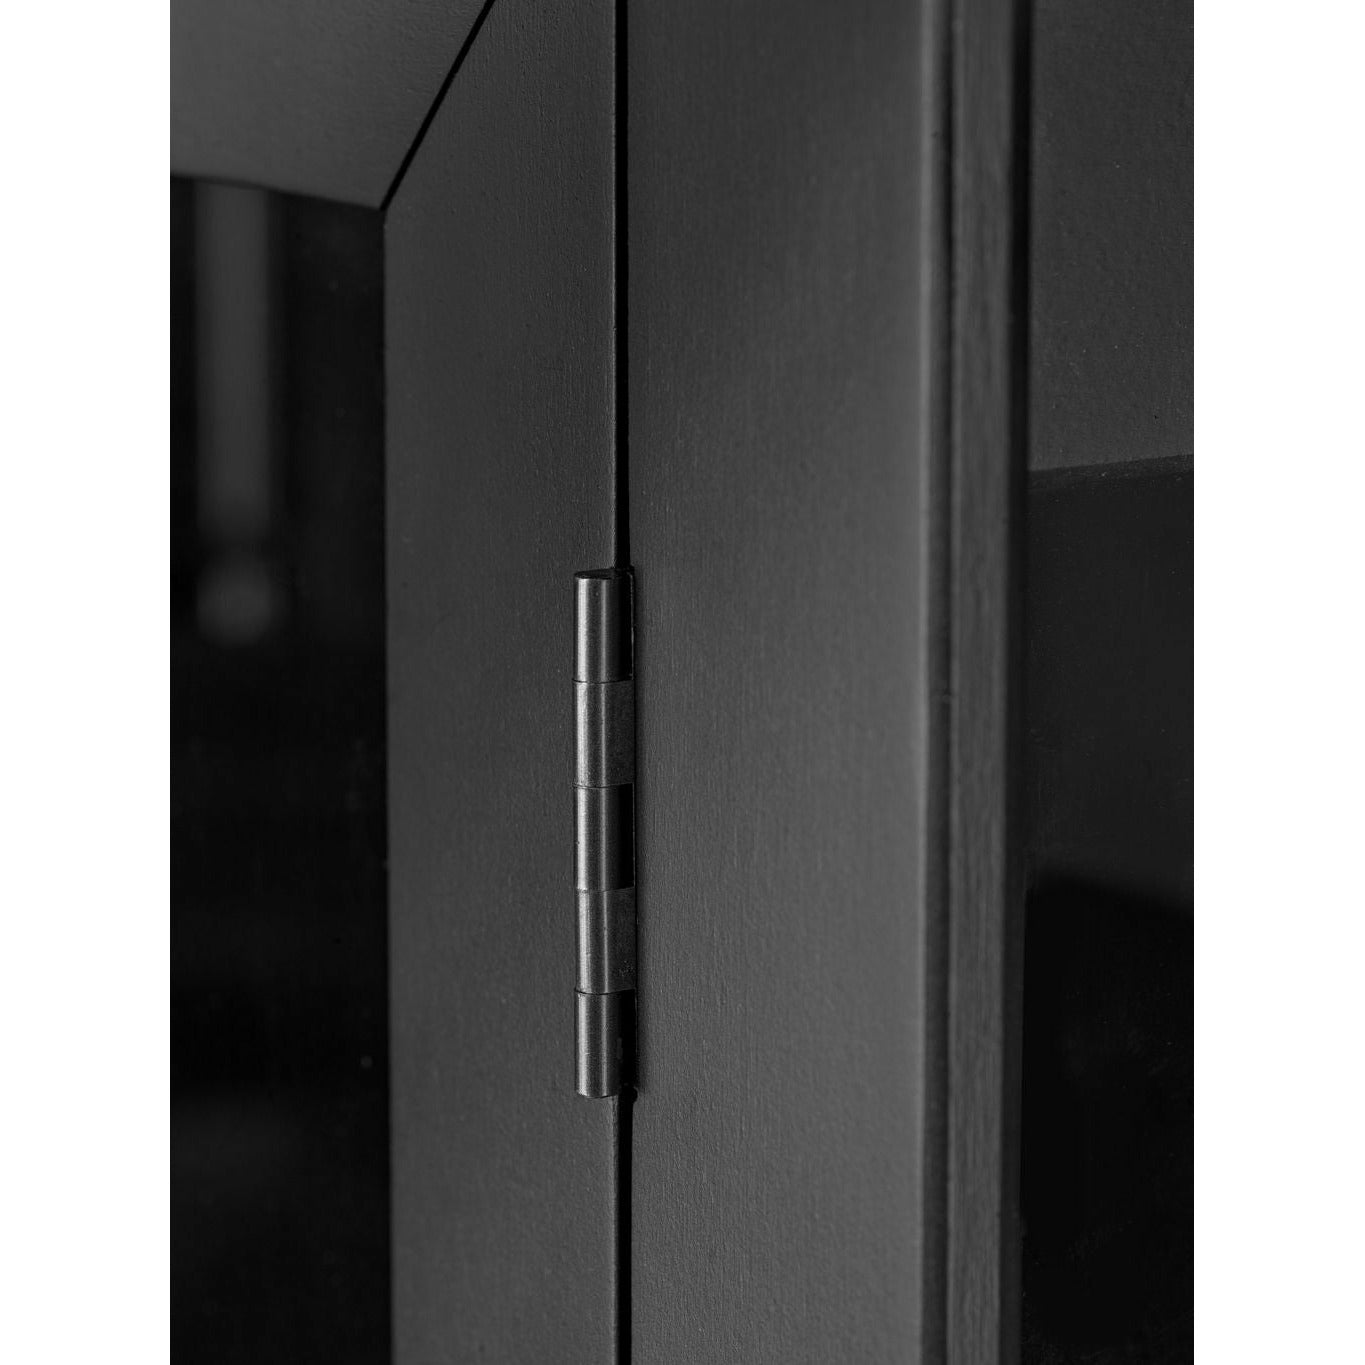 FDB Møbler A90 Boderne Display Szafka Beech Black Lanquered, H: 127 cm